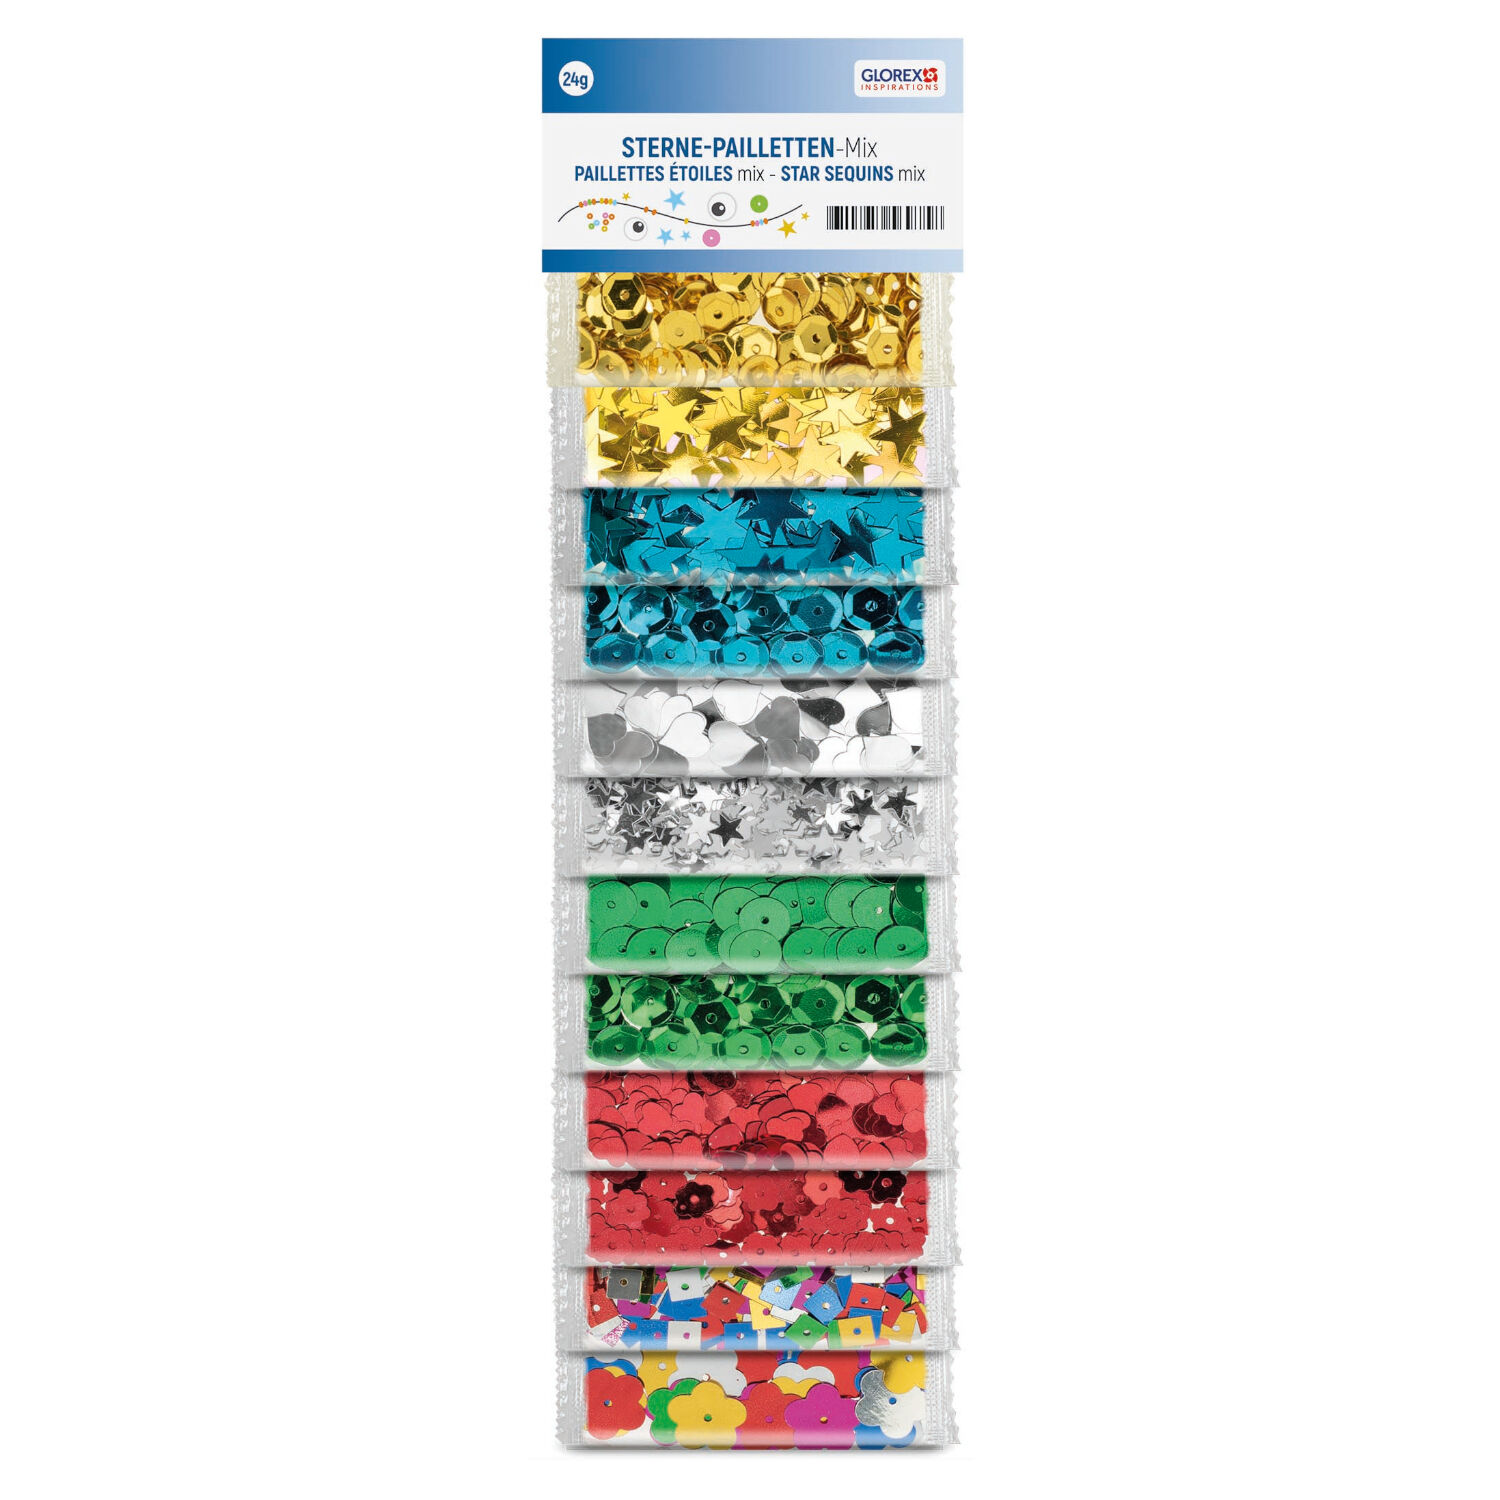 NEU Pailletten-Mix, 24 g, sortiert bunt in 12 Farben